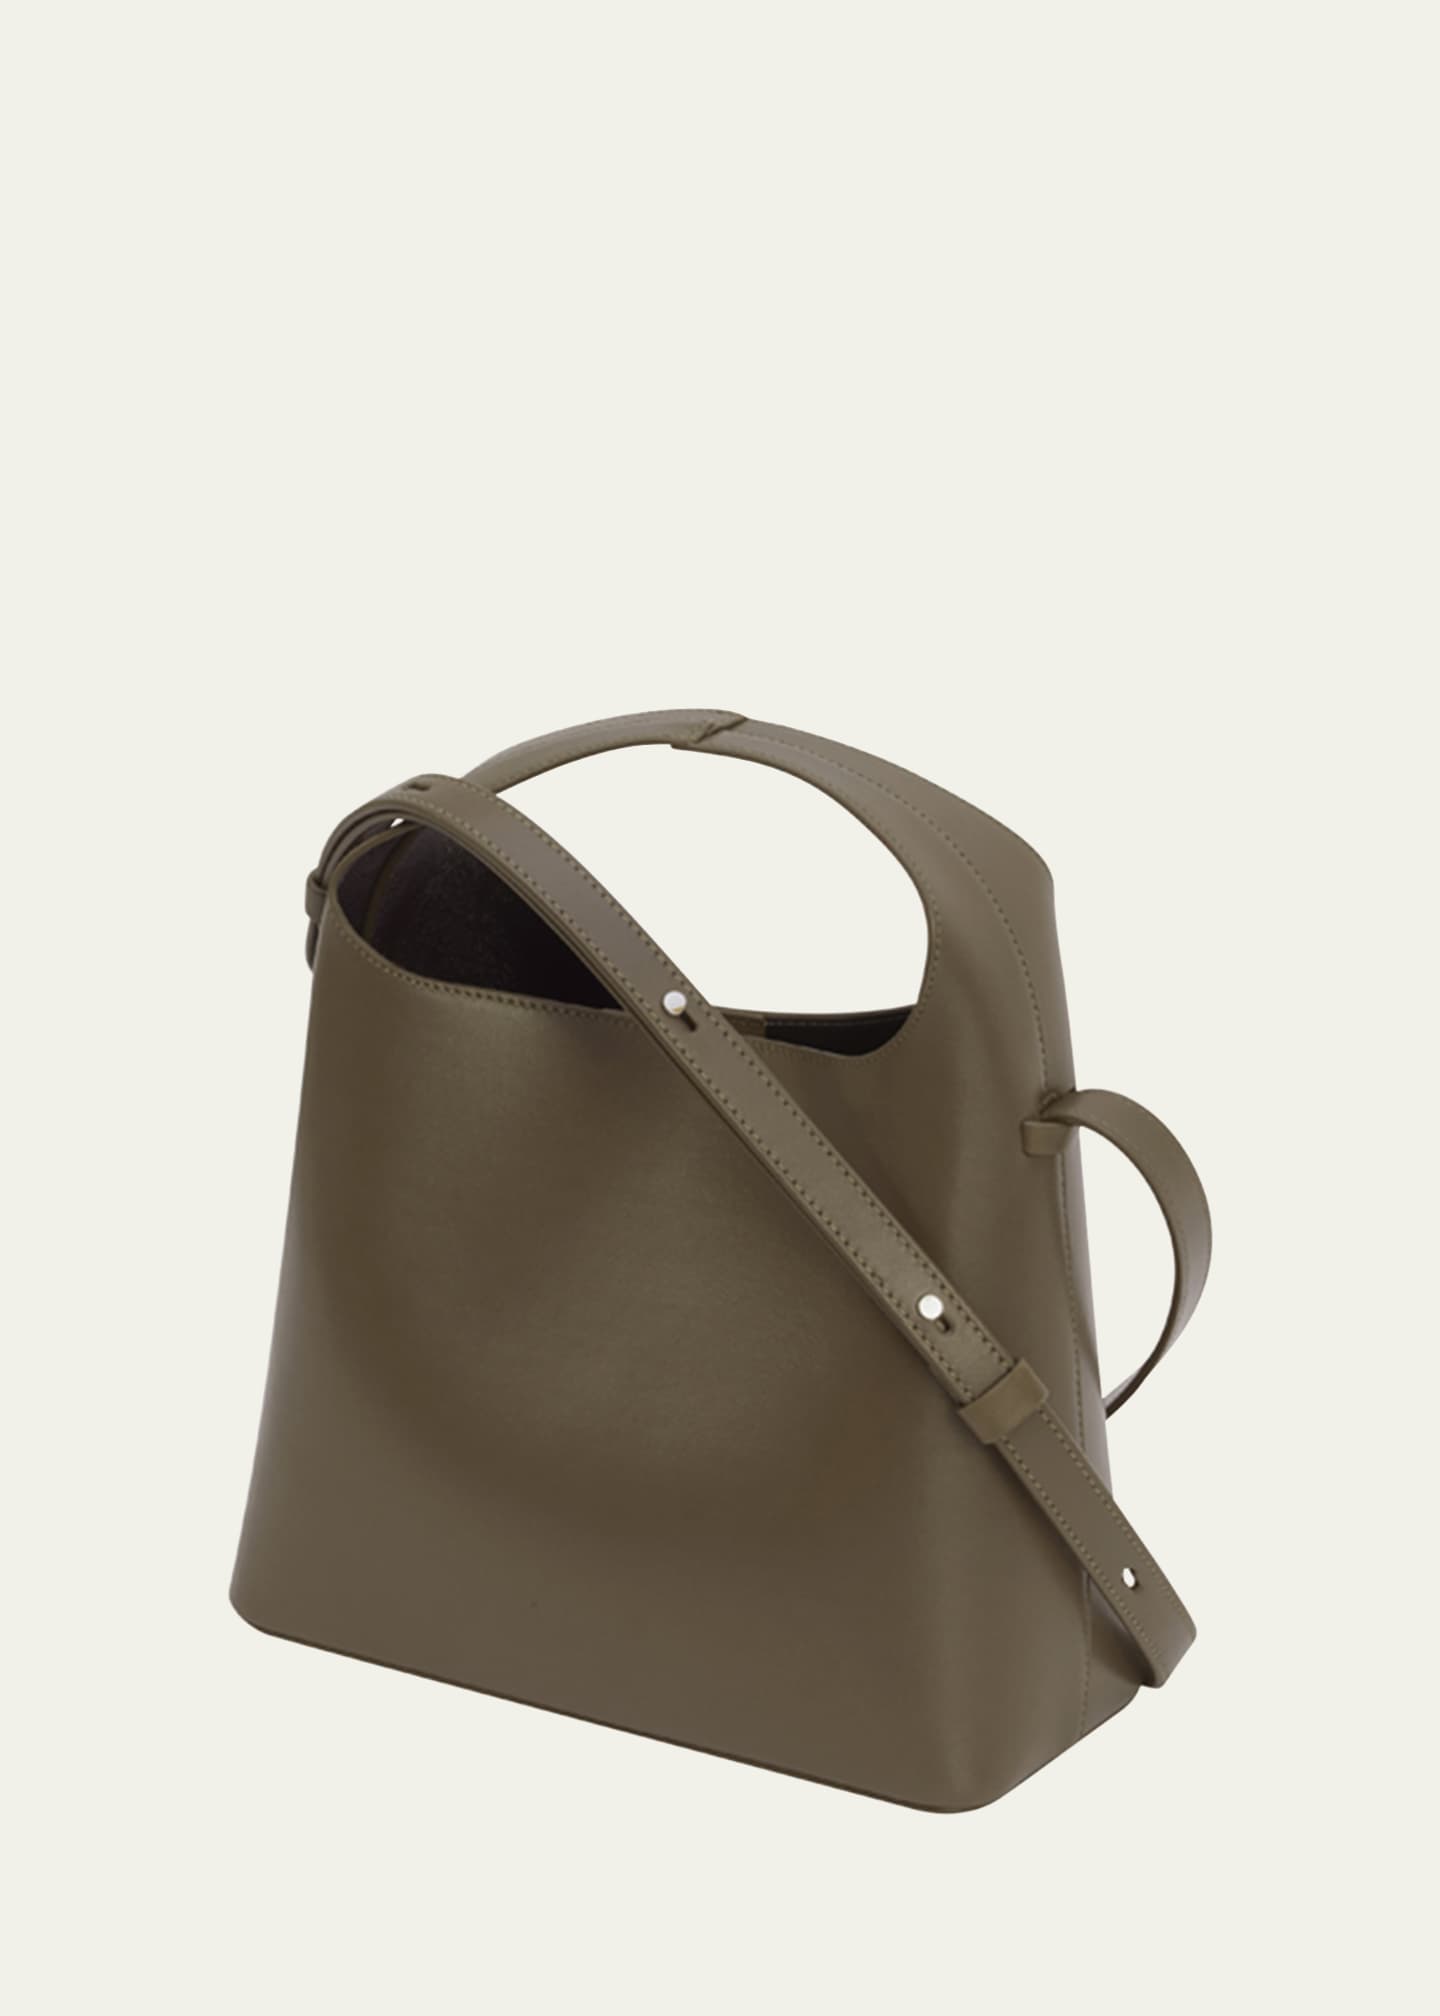 Aesther Ekme Sac Mini Leather Shoulder Bag, 197 Crocodile, Women's, Handbags & Purses Crossbody Bags & Camera Bags